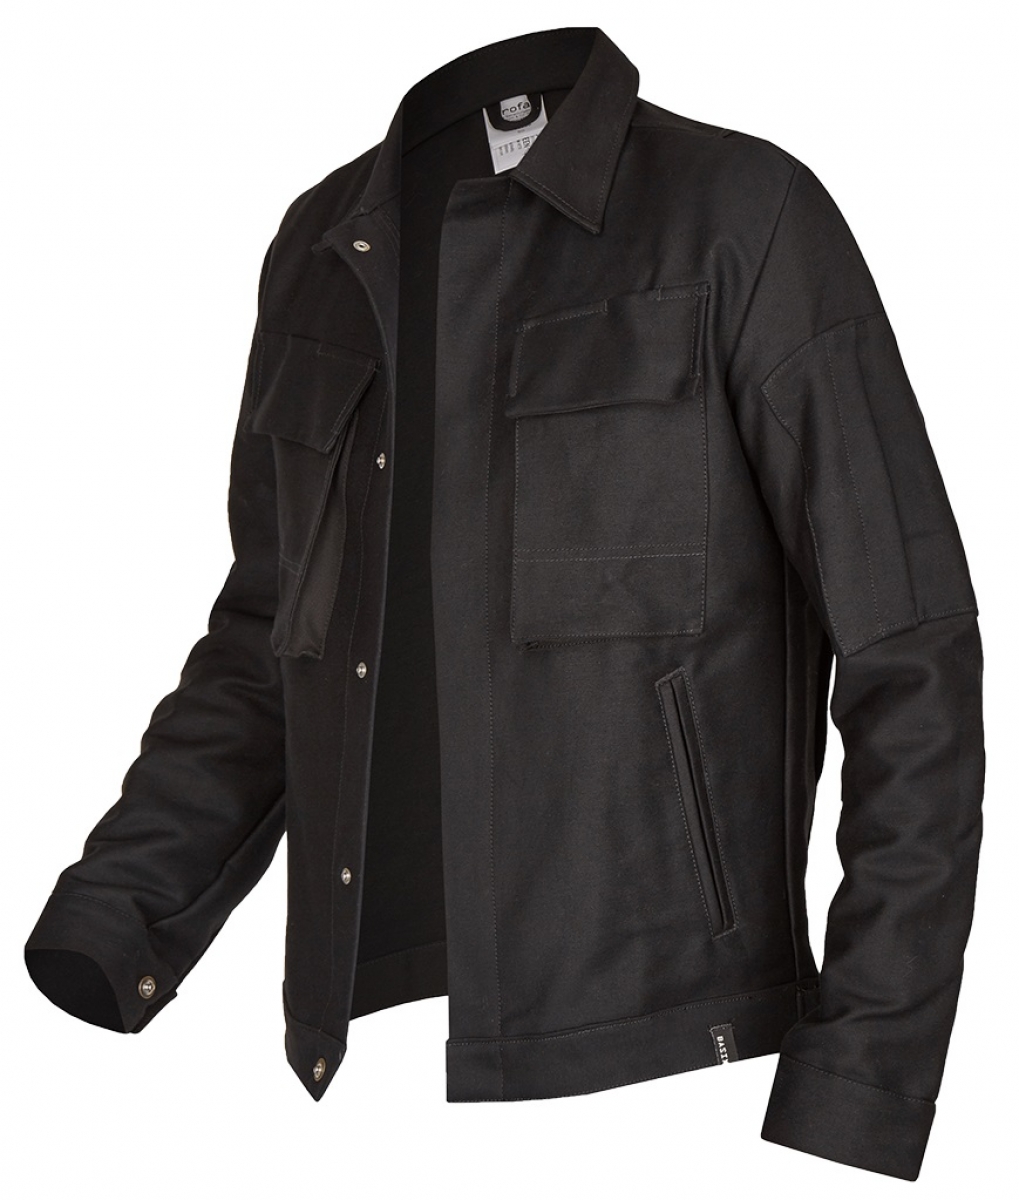 ROFA-Workwear, Bundjacke, Basix, ca. 525 g/m, schwarz